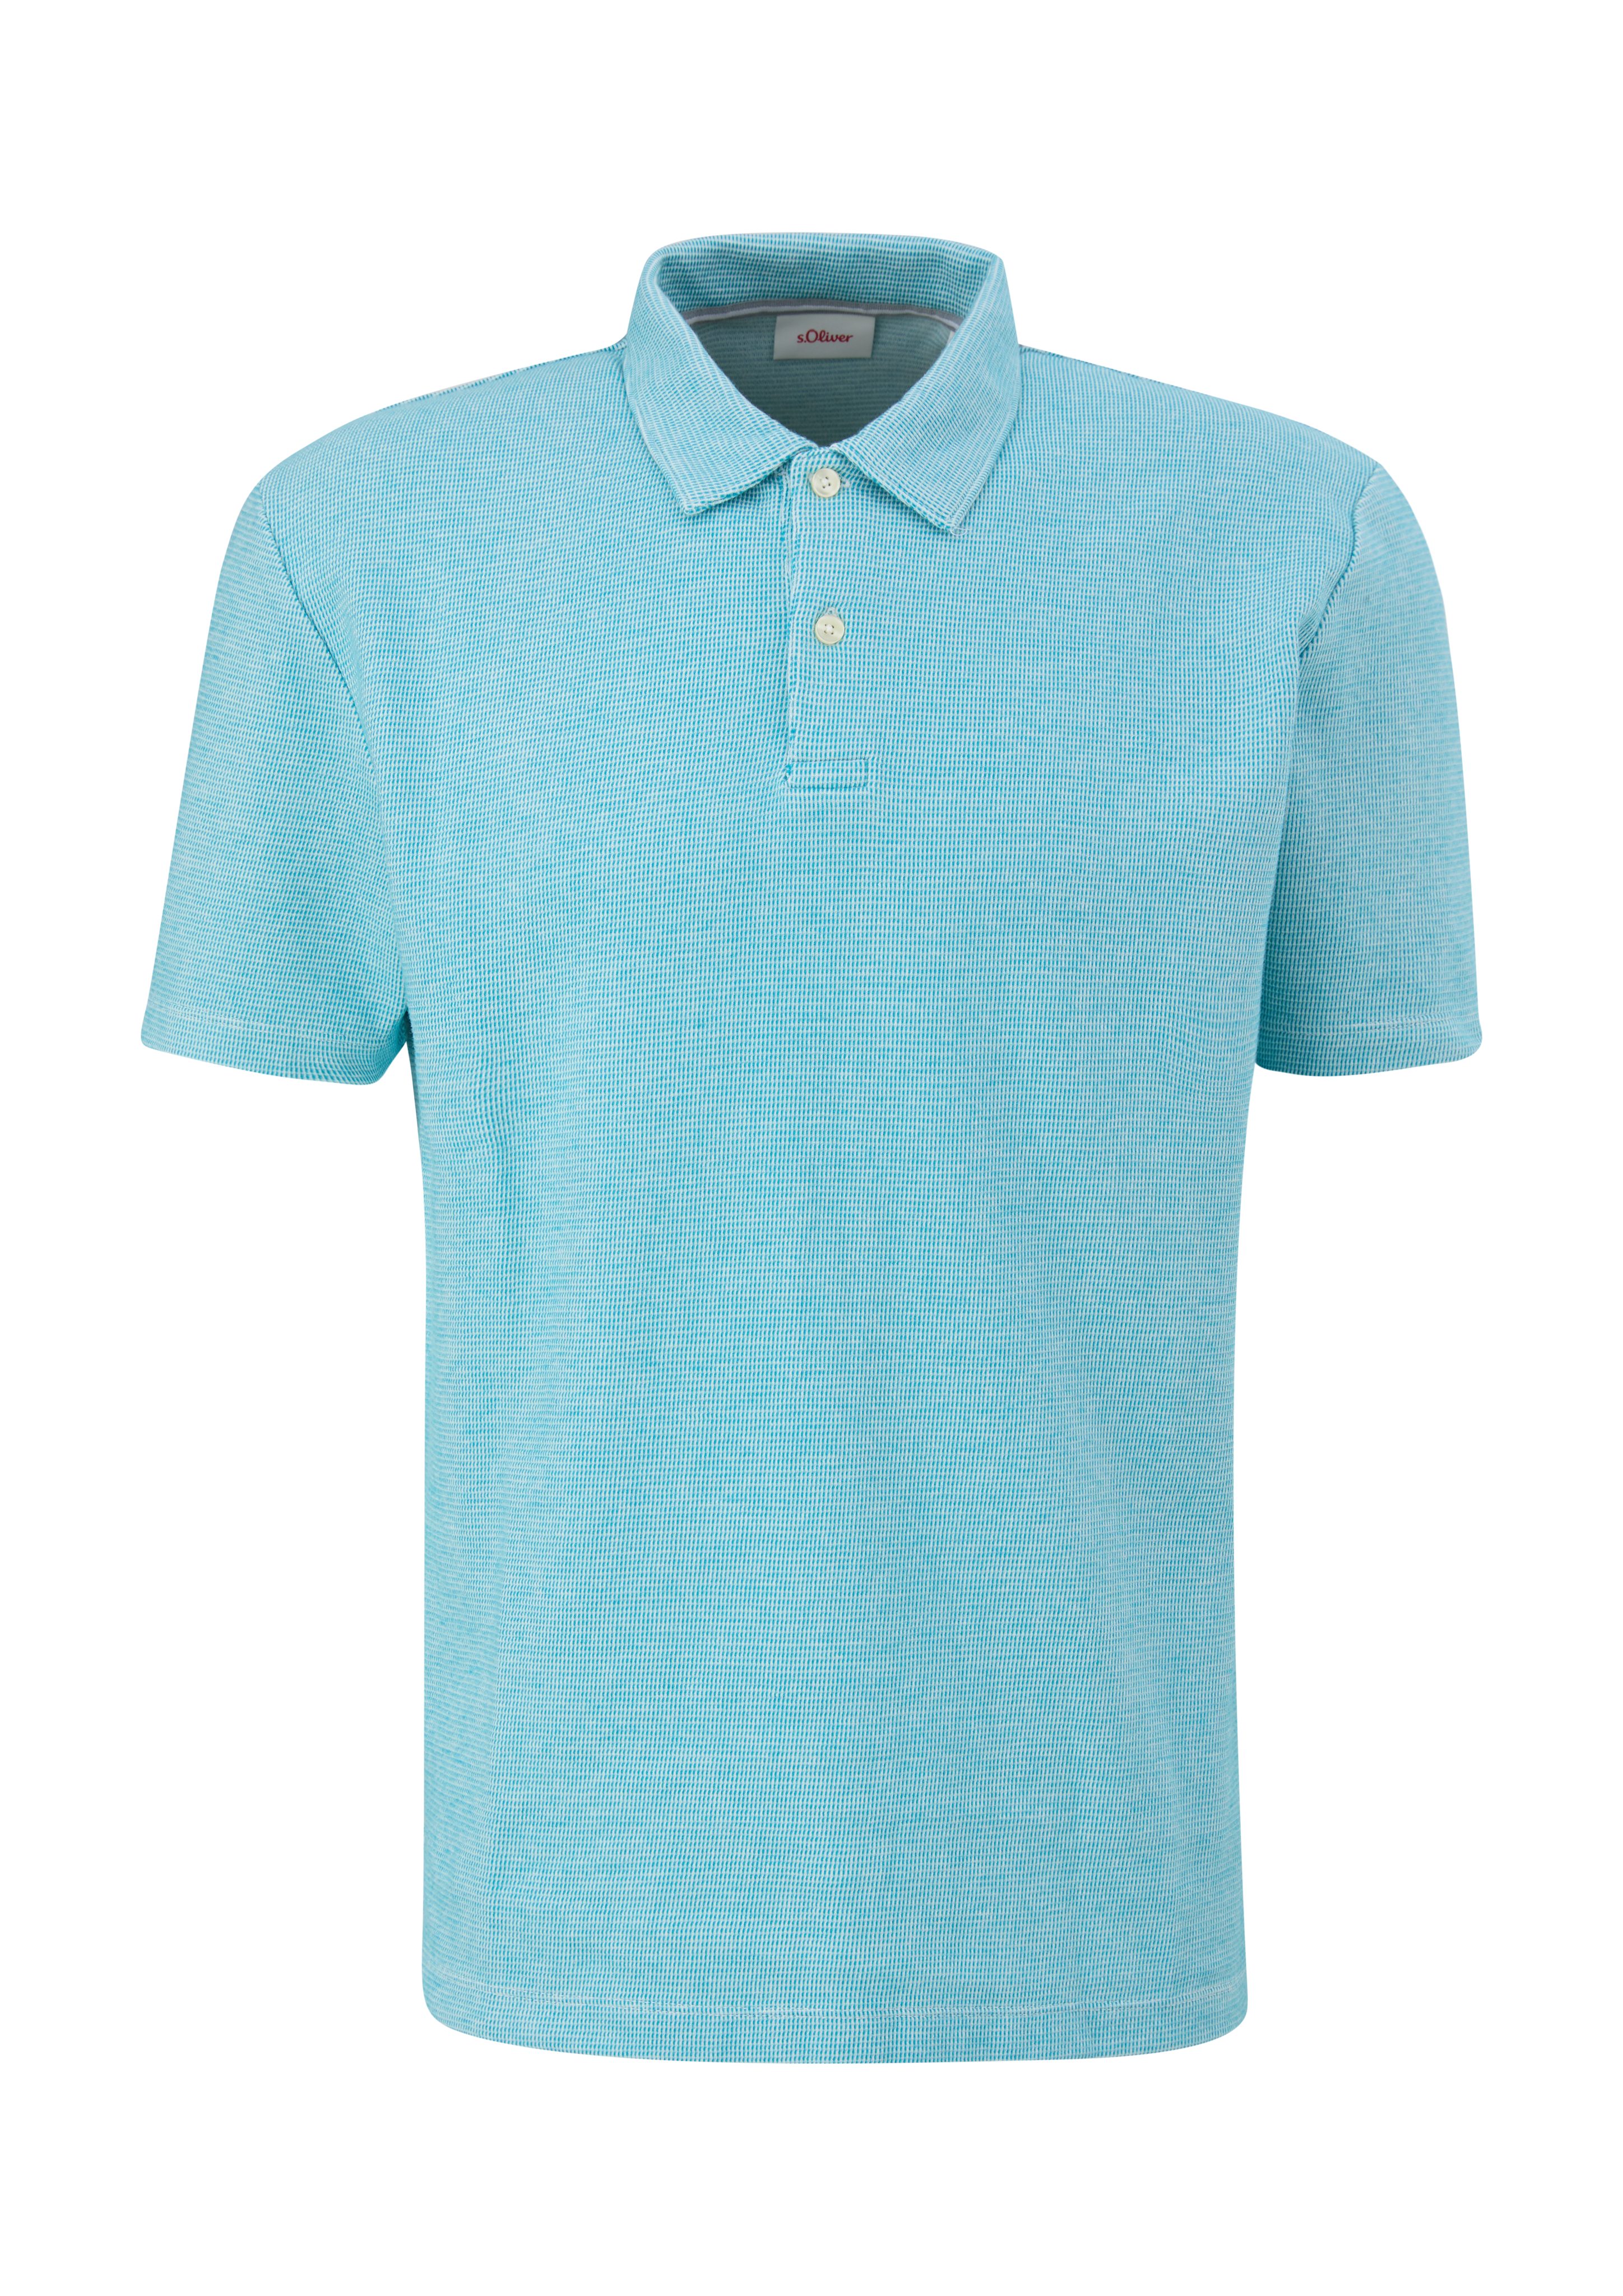 s.Oliver Kurzarmshirt Poloshirt aus Baumwollmix türkisblau